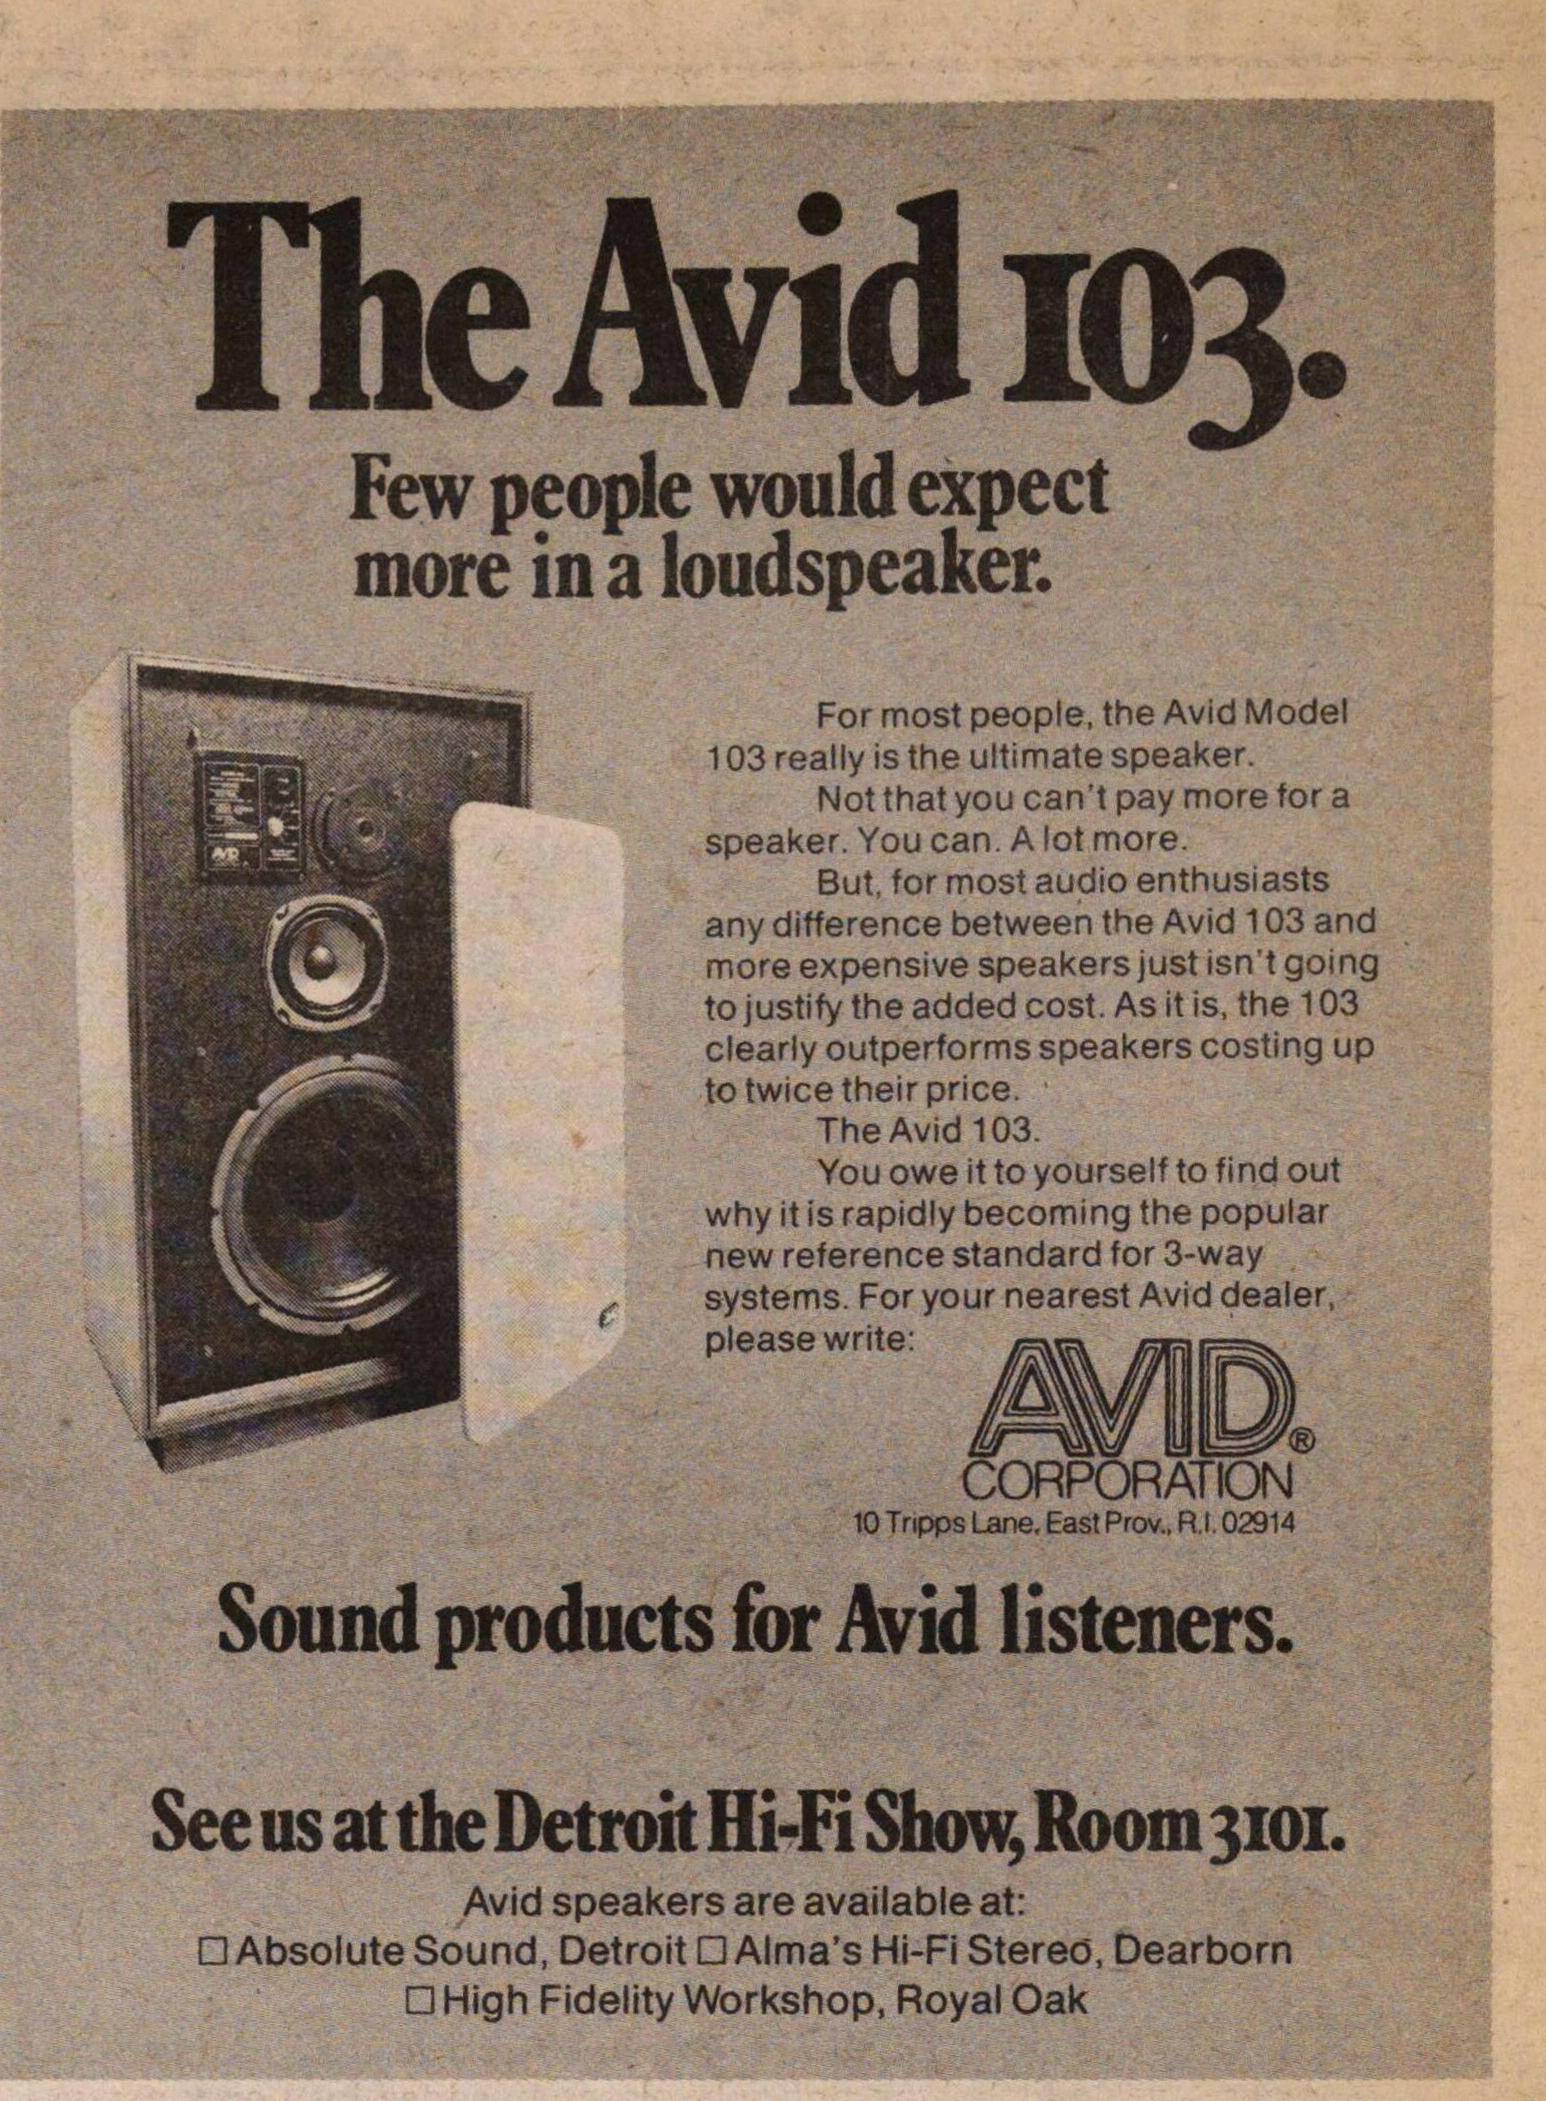 Avid Corporation 103